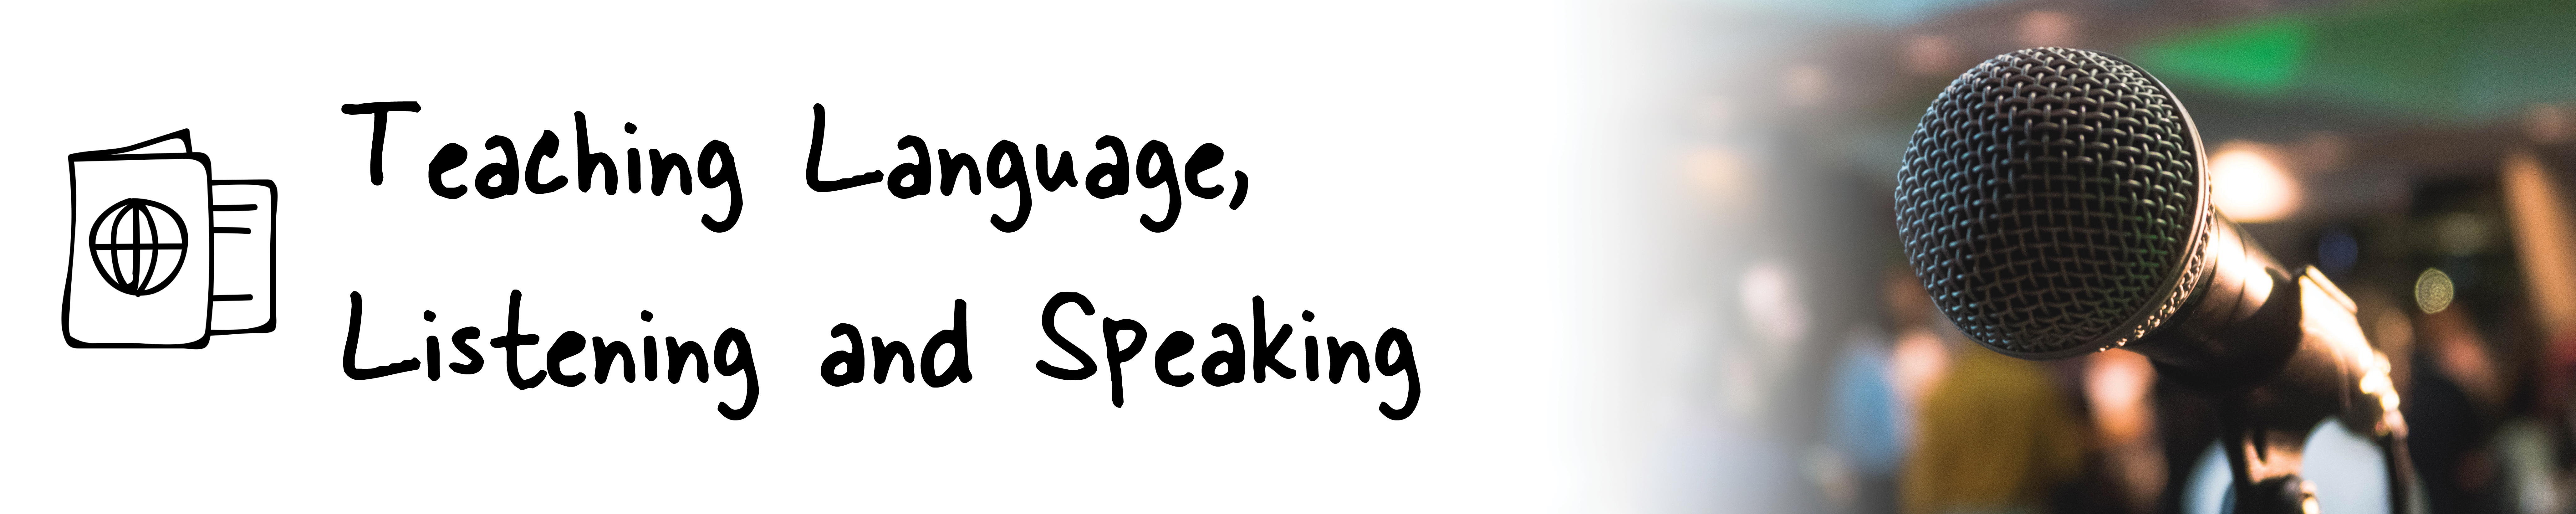 Teaching Language, Listening and Speaking